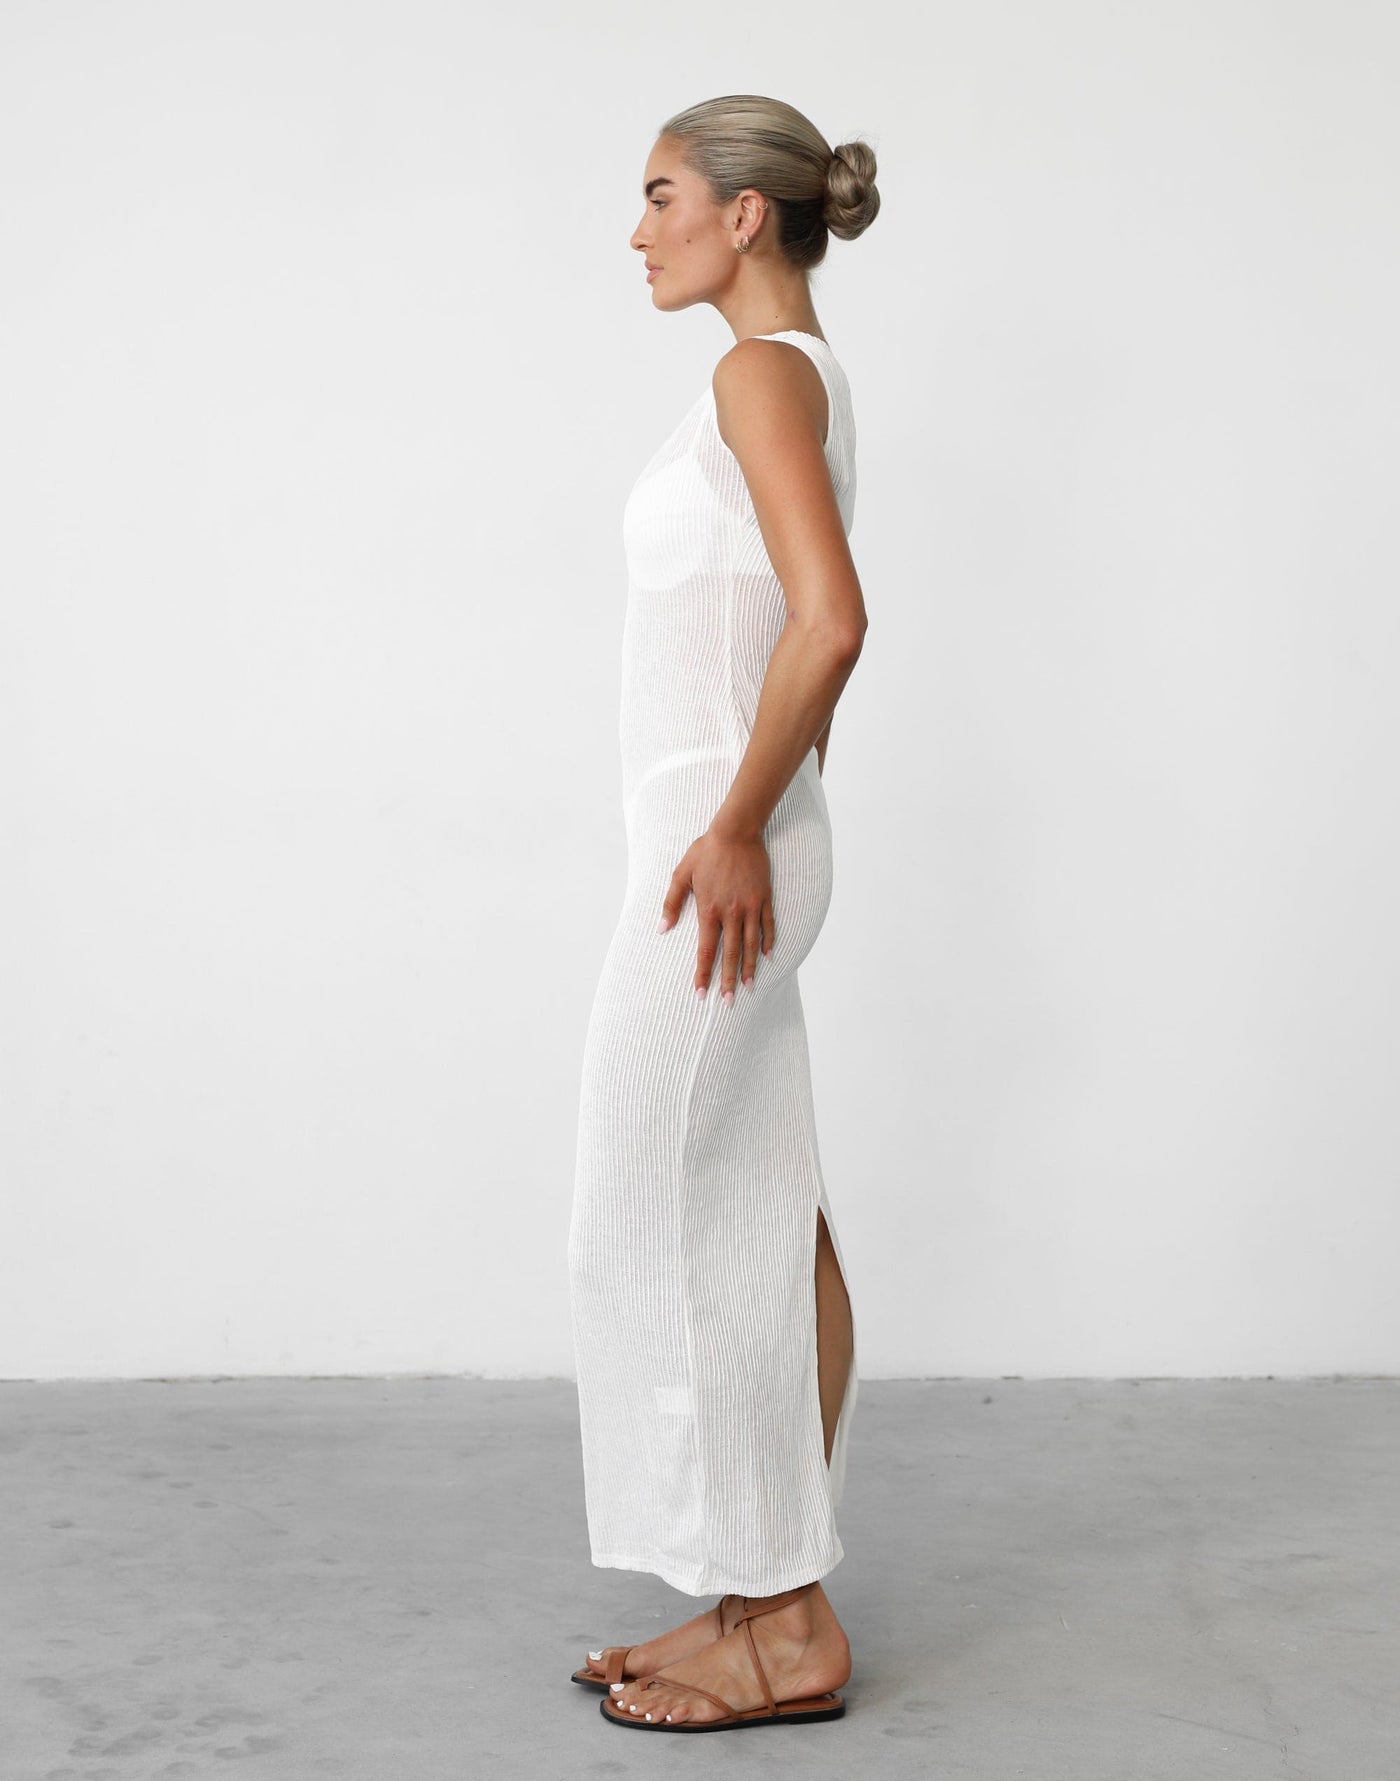 Kinetic Maxi Dress (White) - Sheer Ribbed Maxi Dress - Women's Dress - Charcoal Clothing